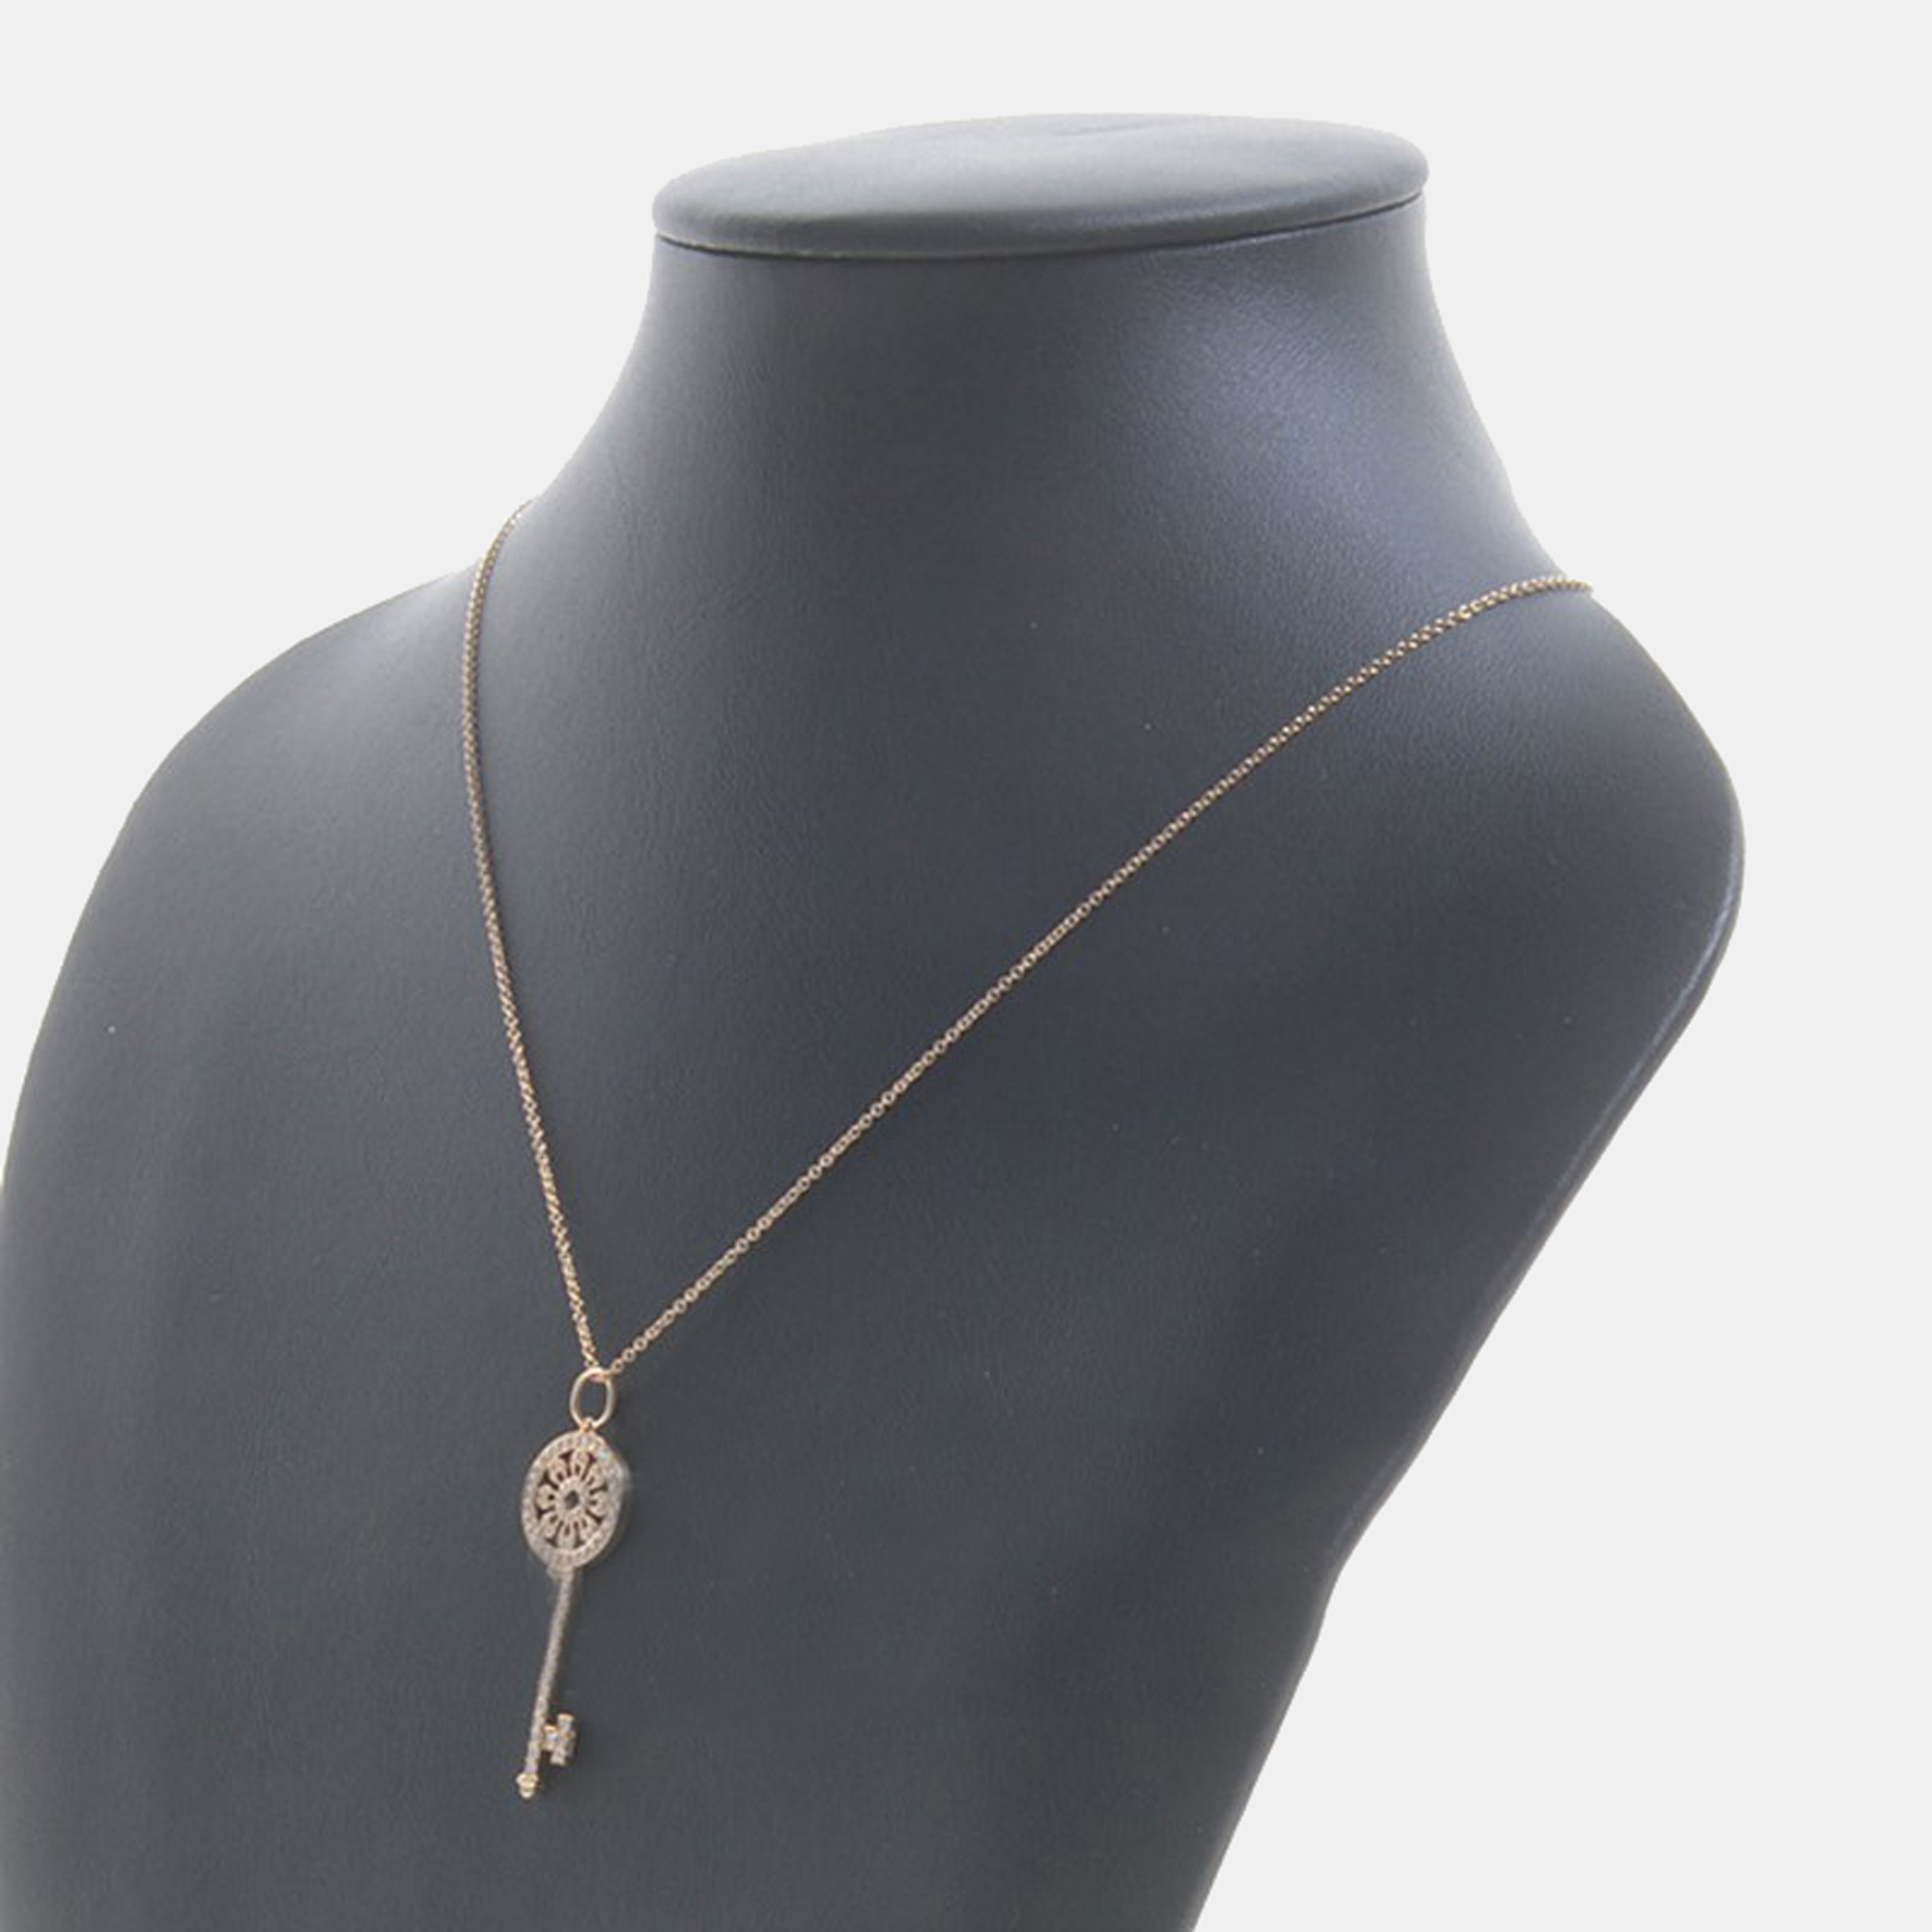 Tiffany & Co. Petals Key 18K Rose Gold Diamond Necklace